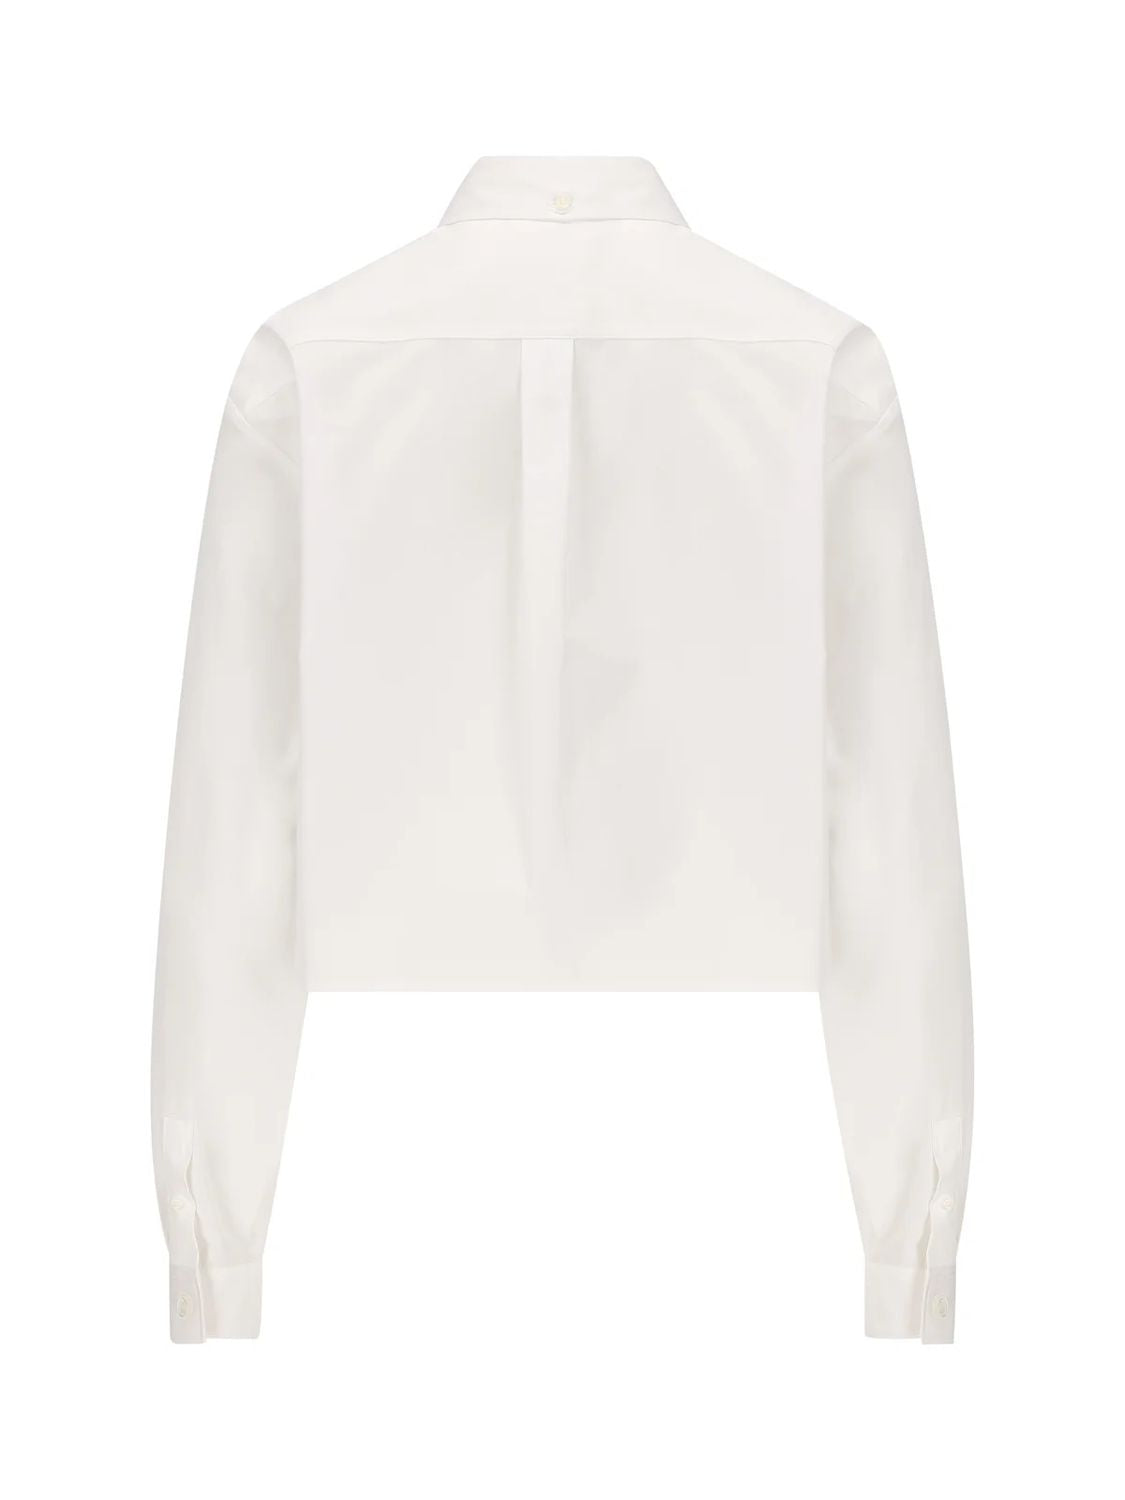 GIVENCHY White Cotton Poplin Button-Down Shirt for Women